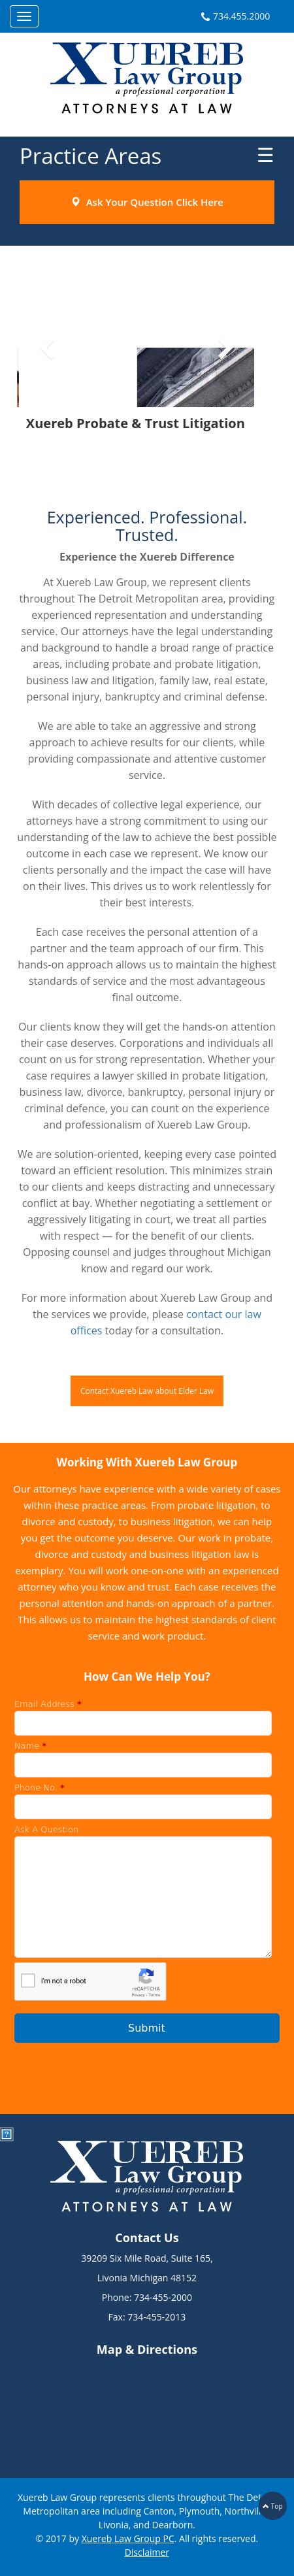 Xuereb Law Group PC - Canton MI Lawyers